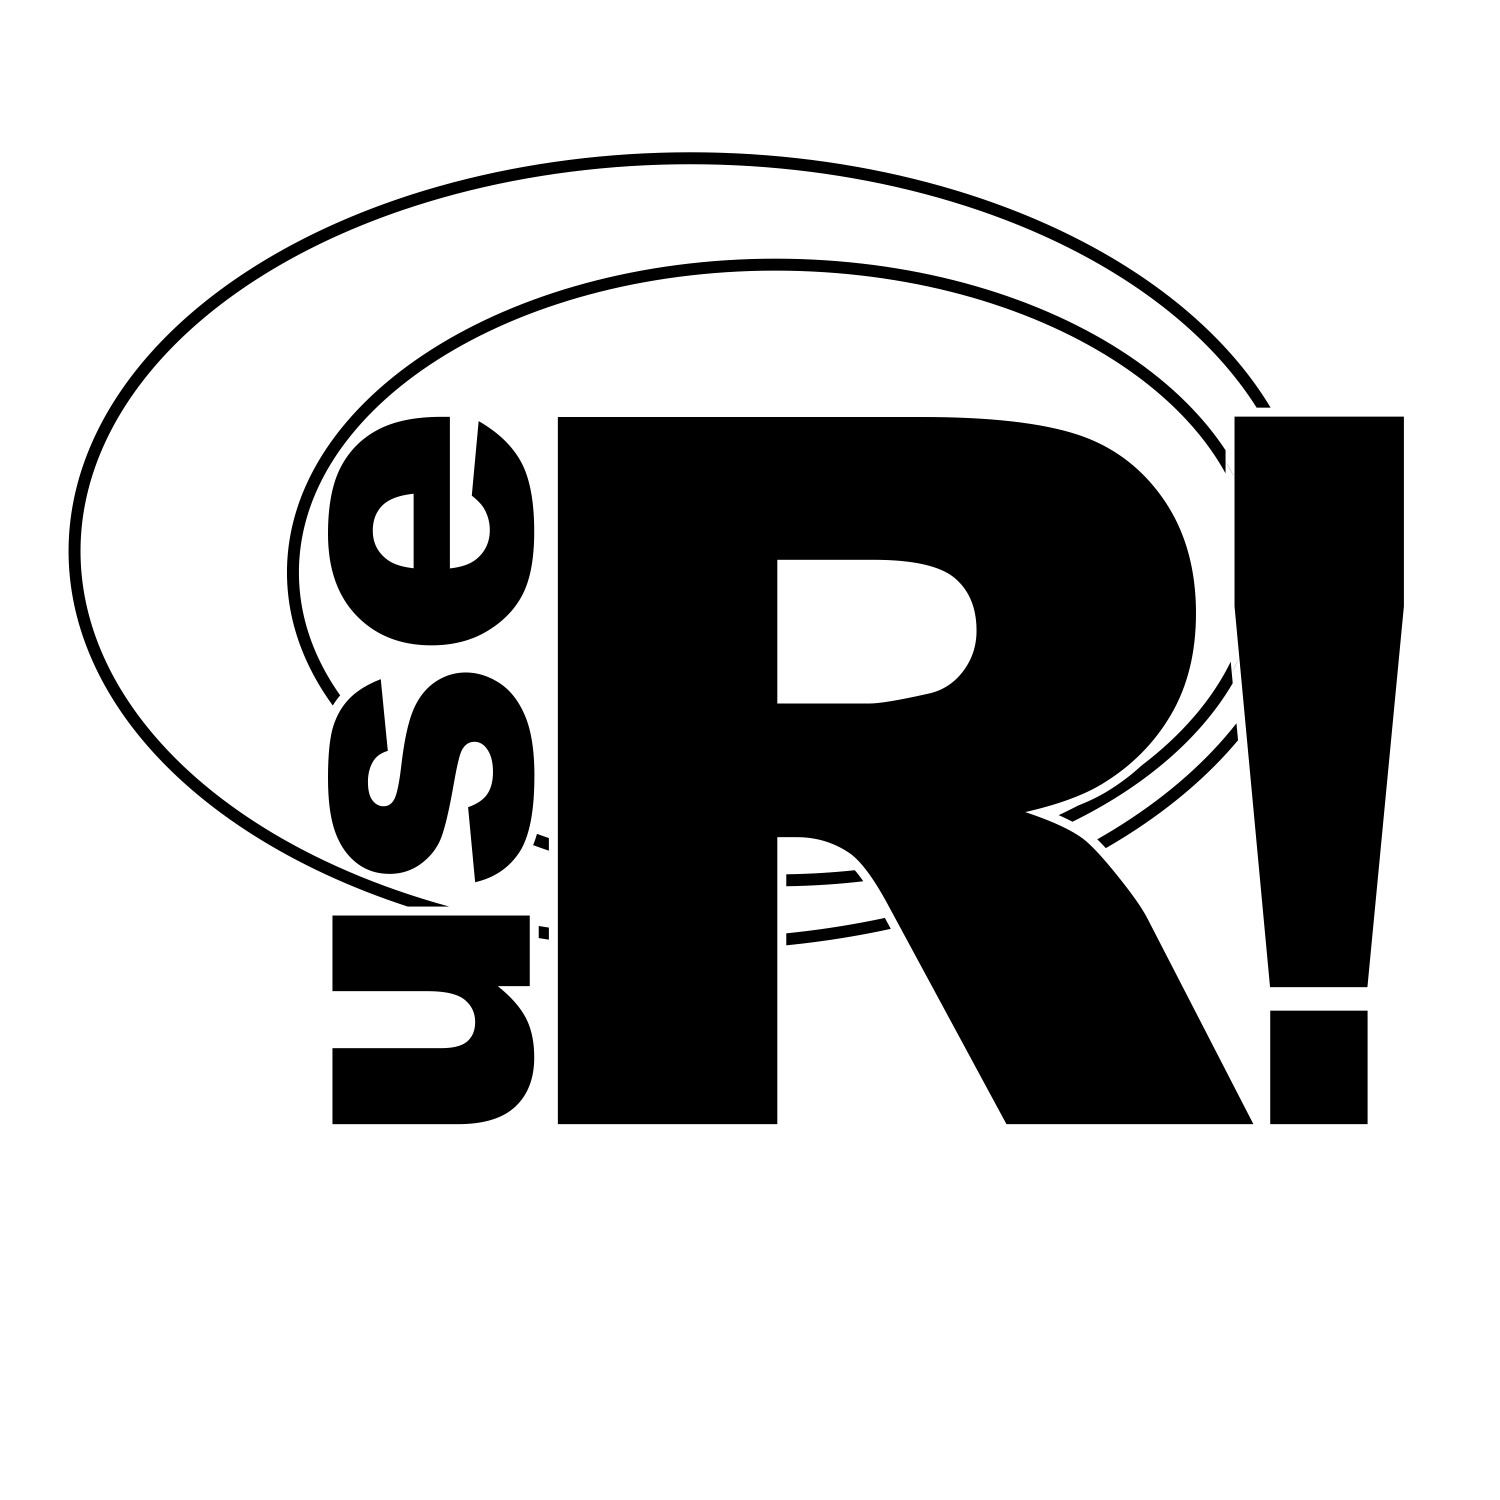 Diversity statement logo